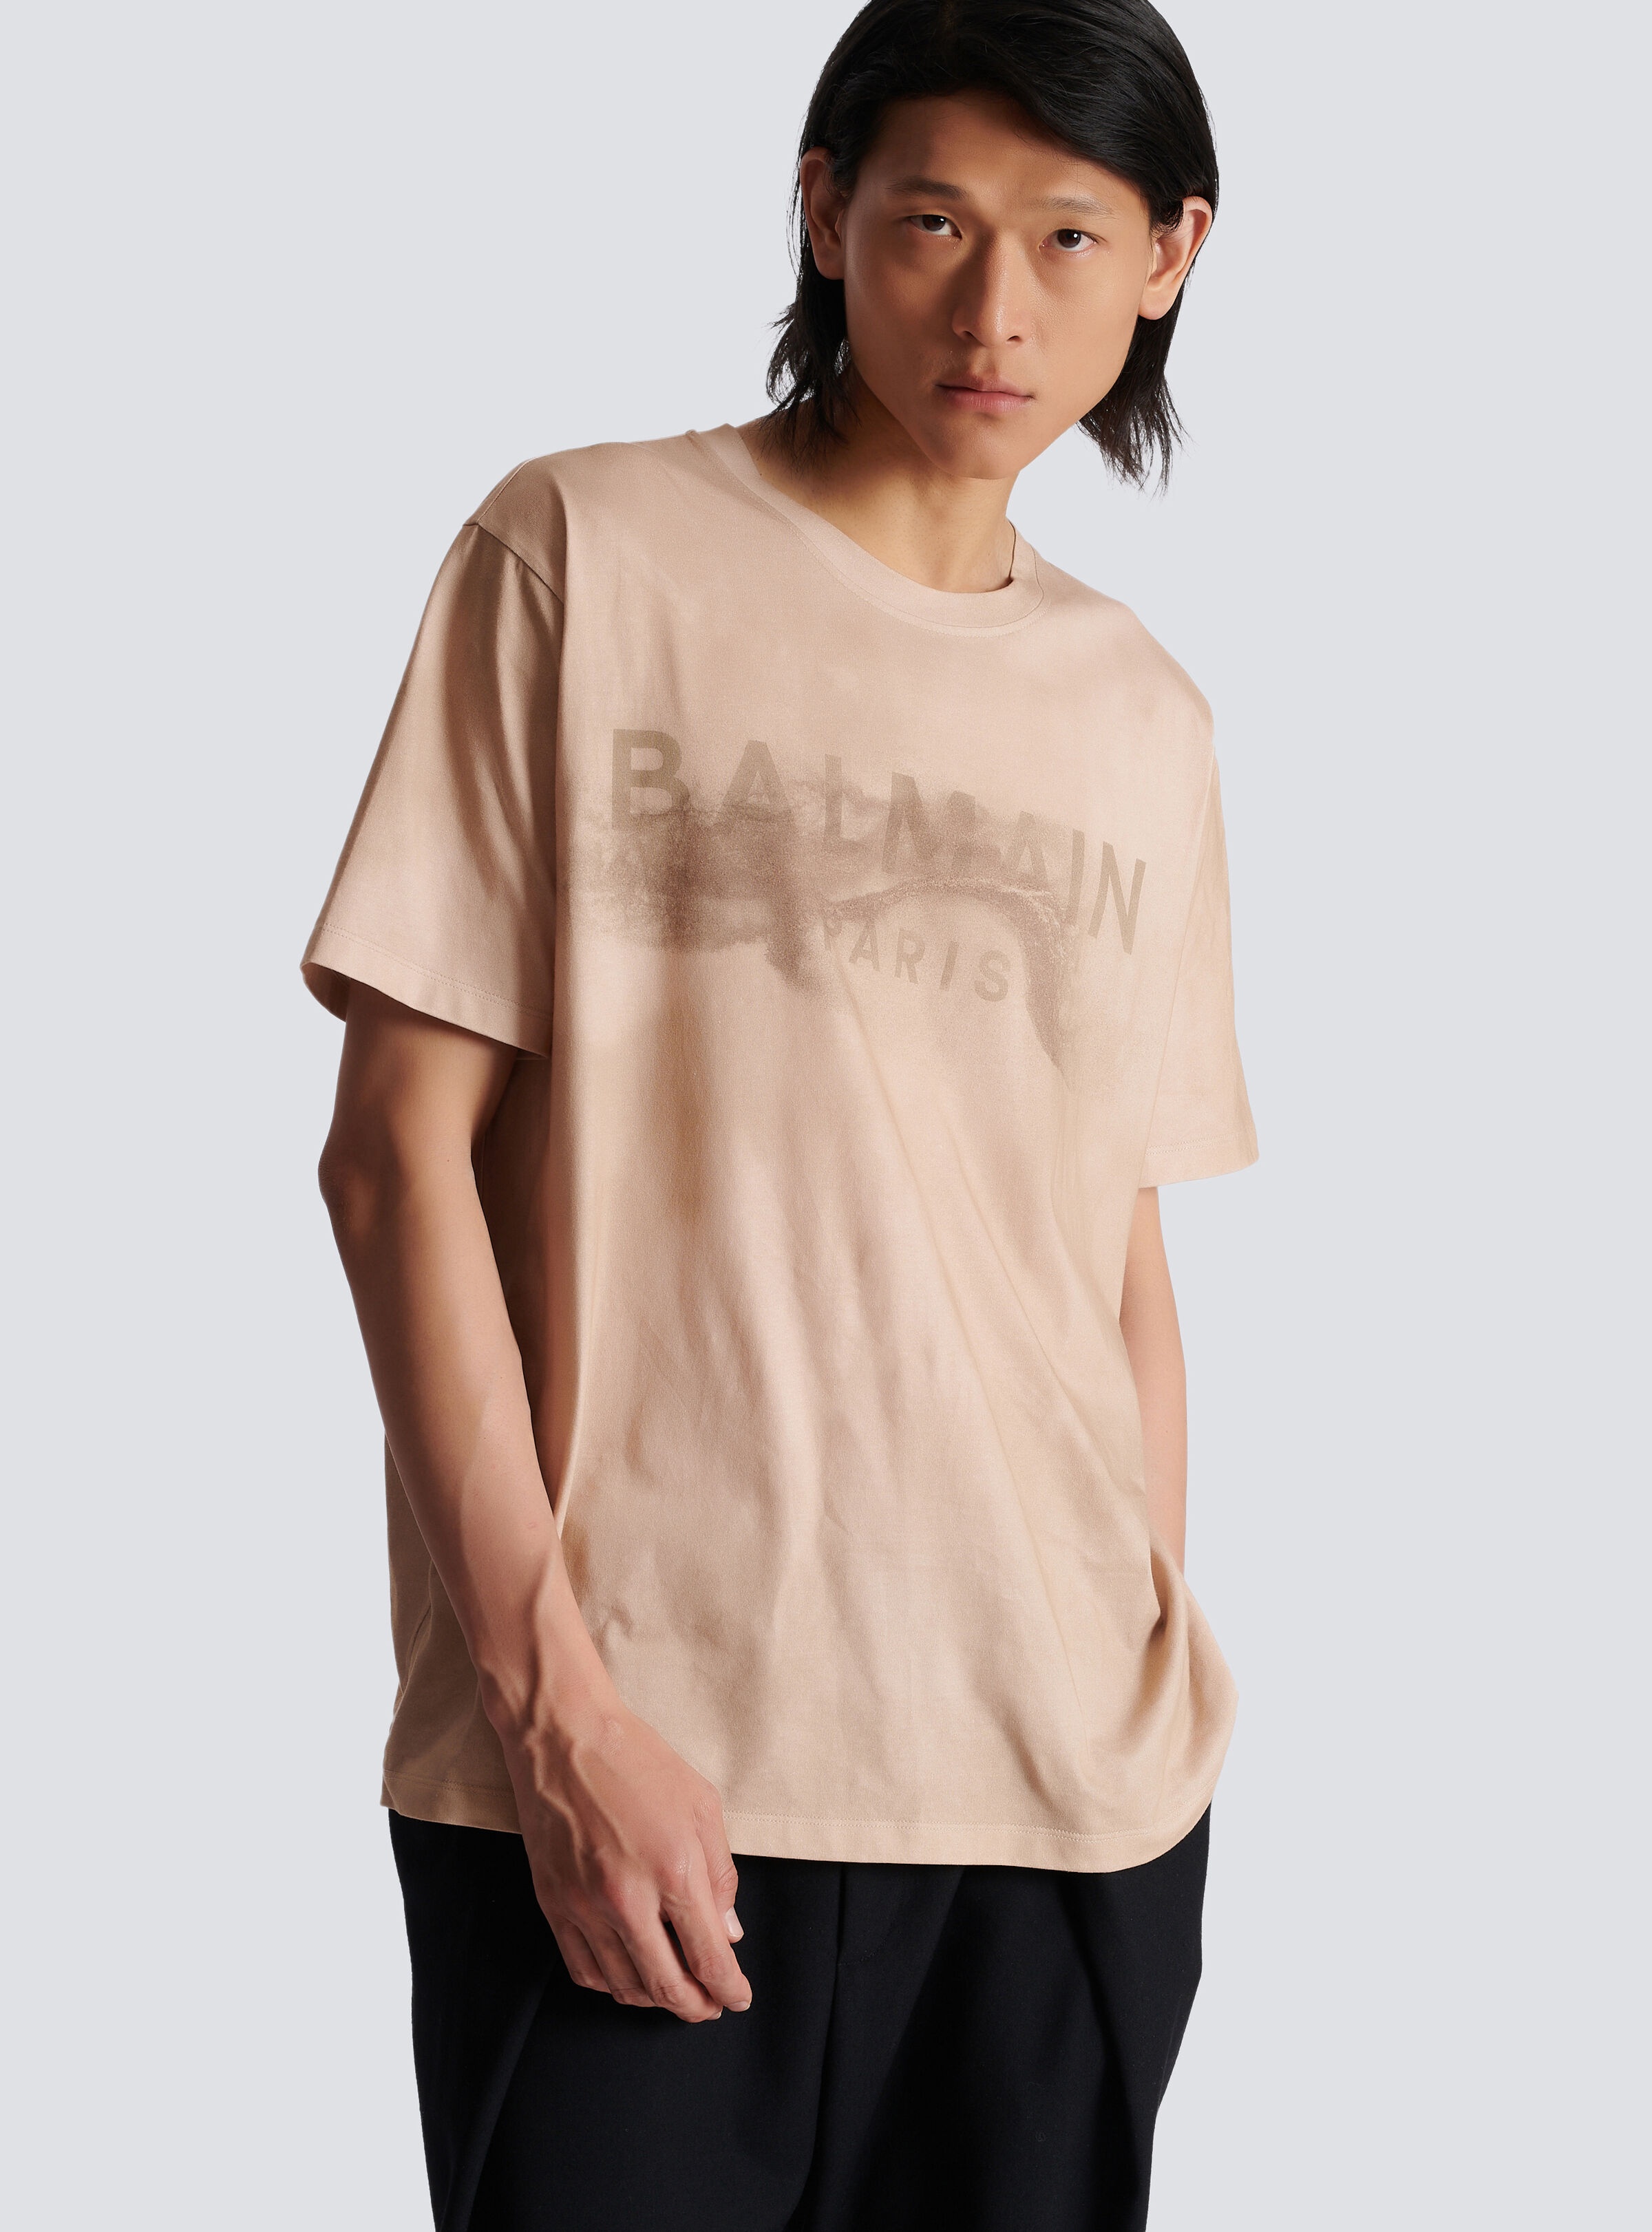 T-shirt in eco-responsible cotton with Balmain Paris desert logo - 6